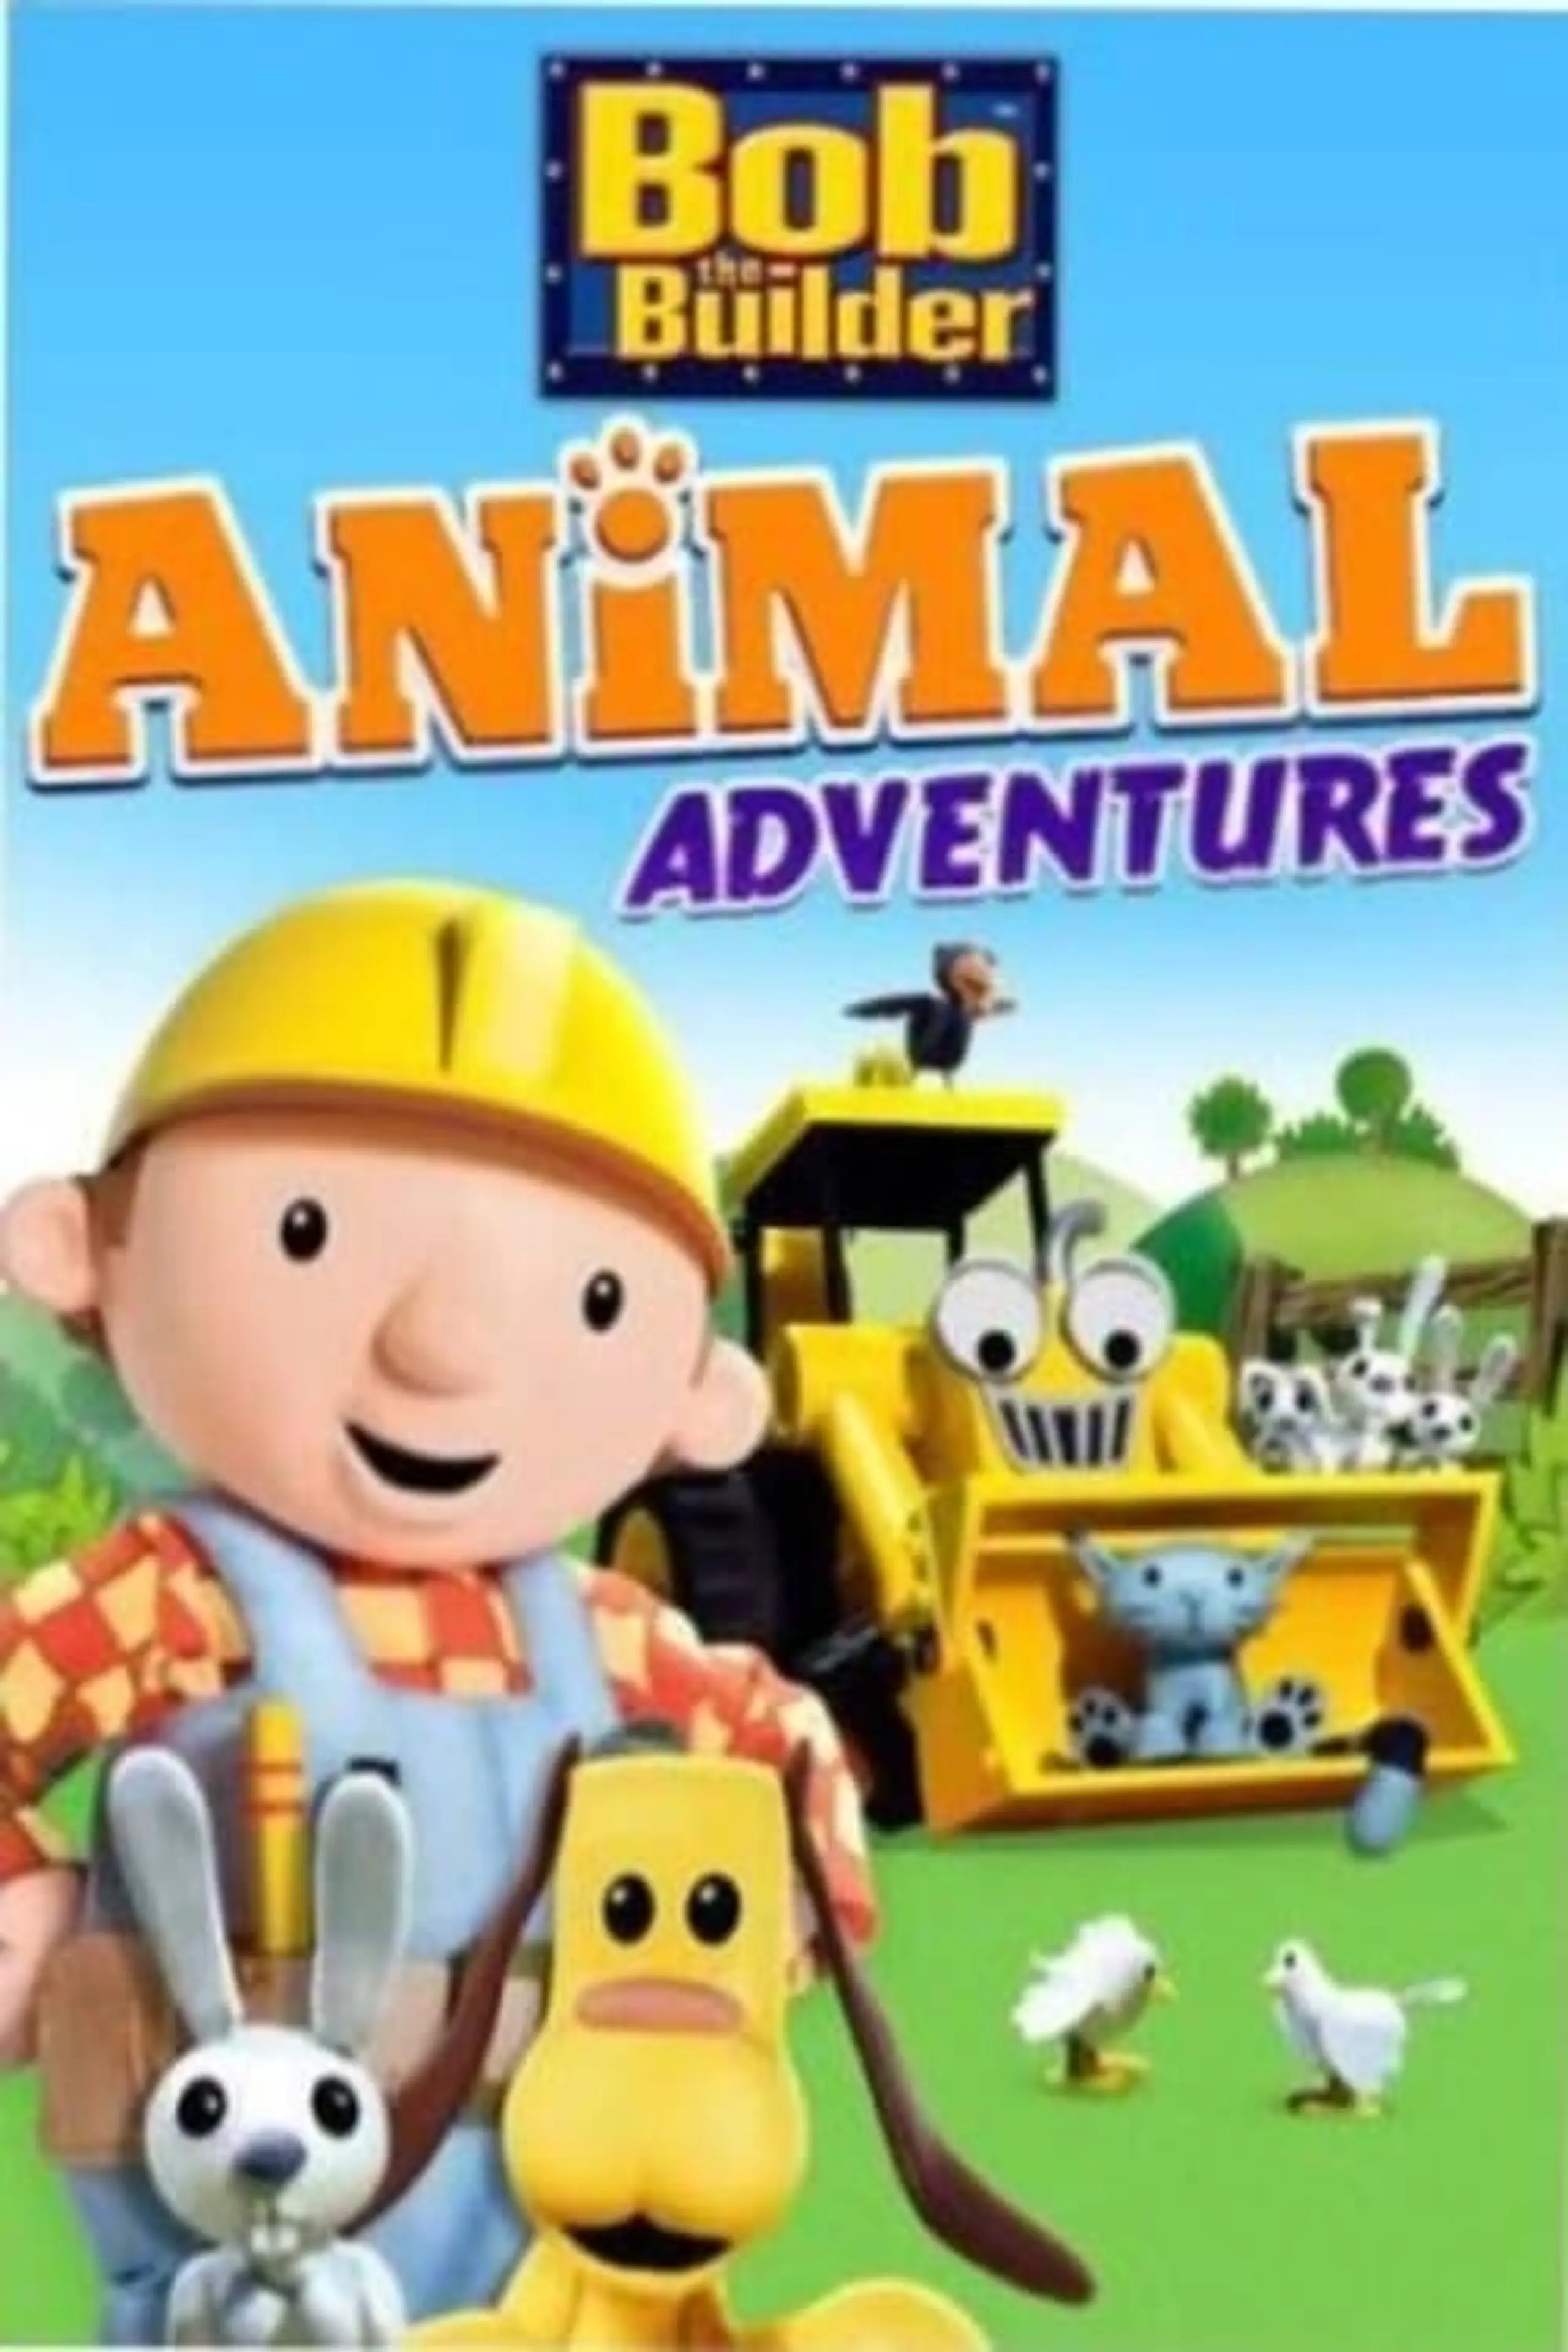 Bob the Builder: Animal Adventures